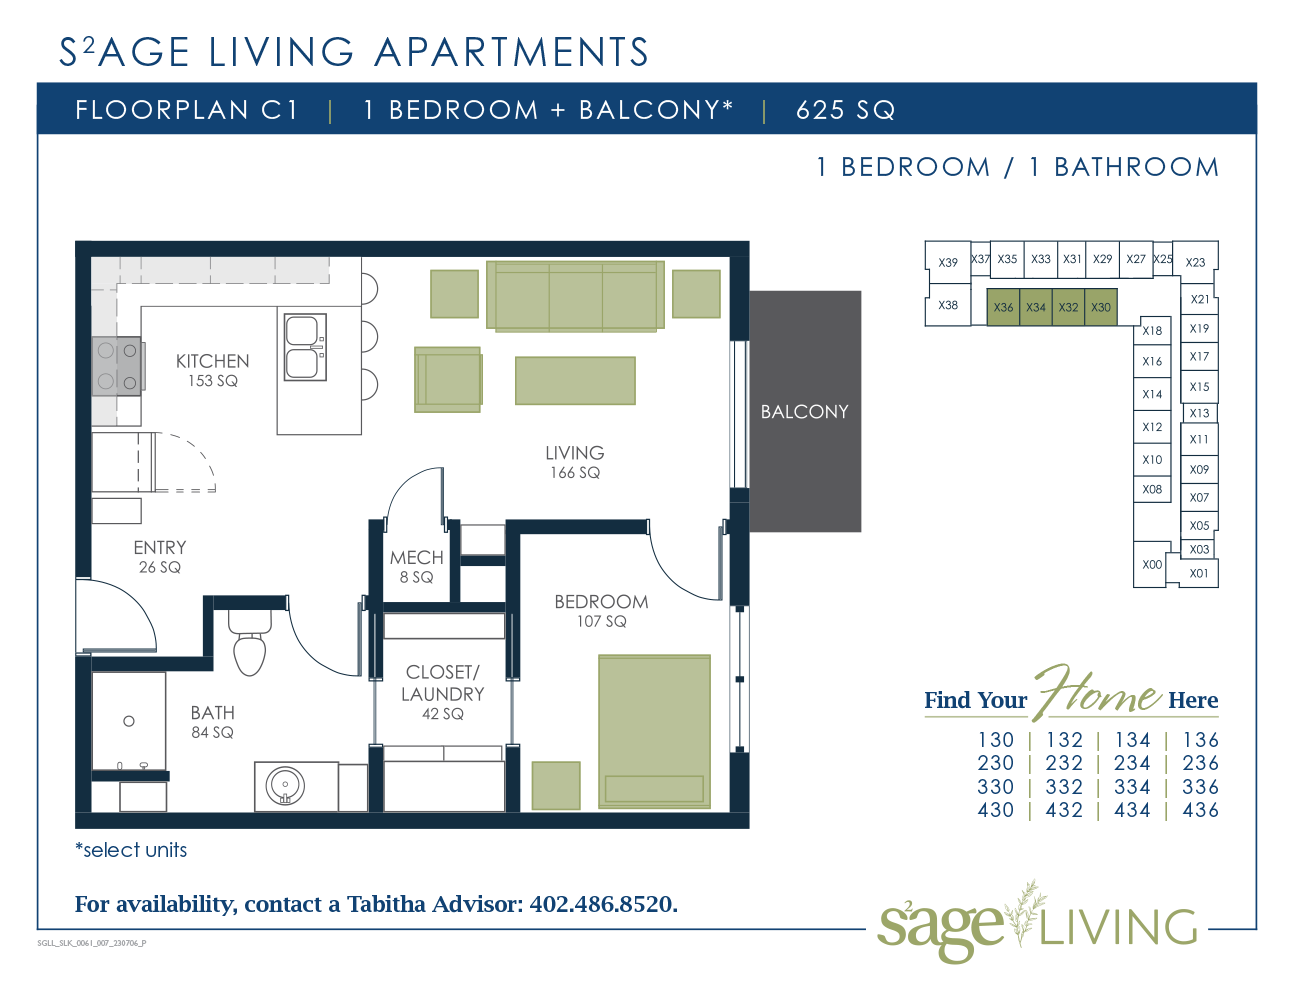 S2age Living Floor Plan, Apartment C1